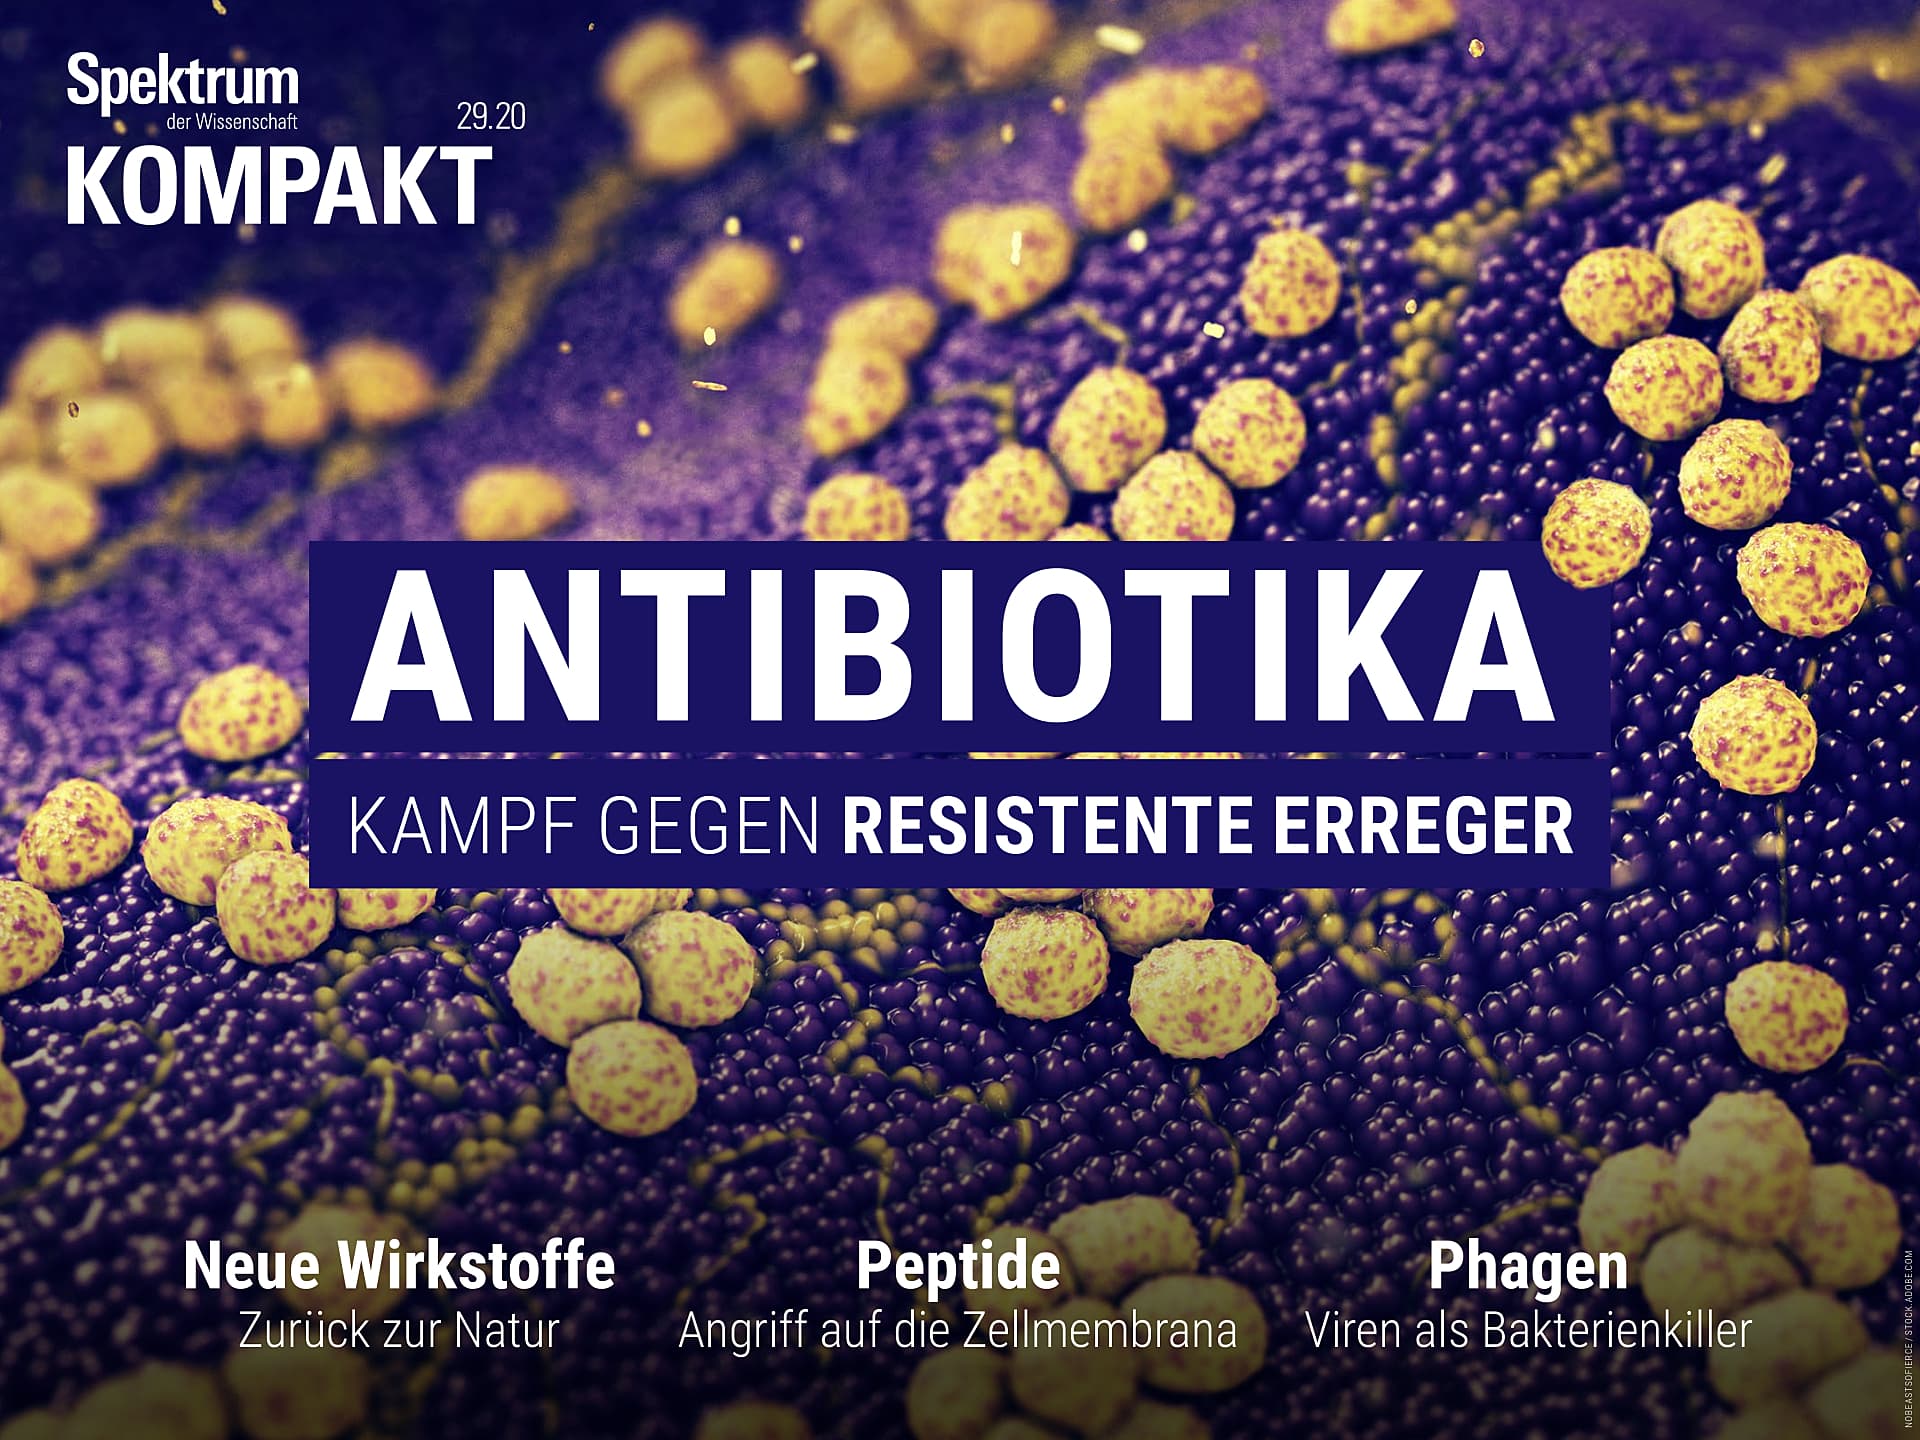 Antibiotika - Kampf gegen resistente Erreger